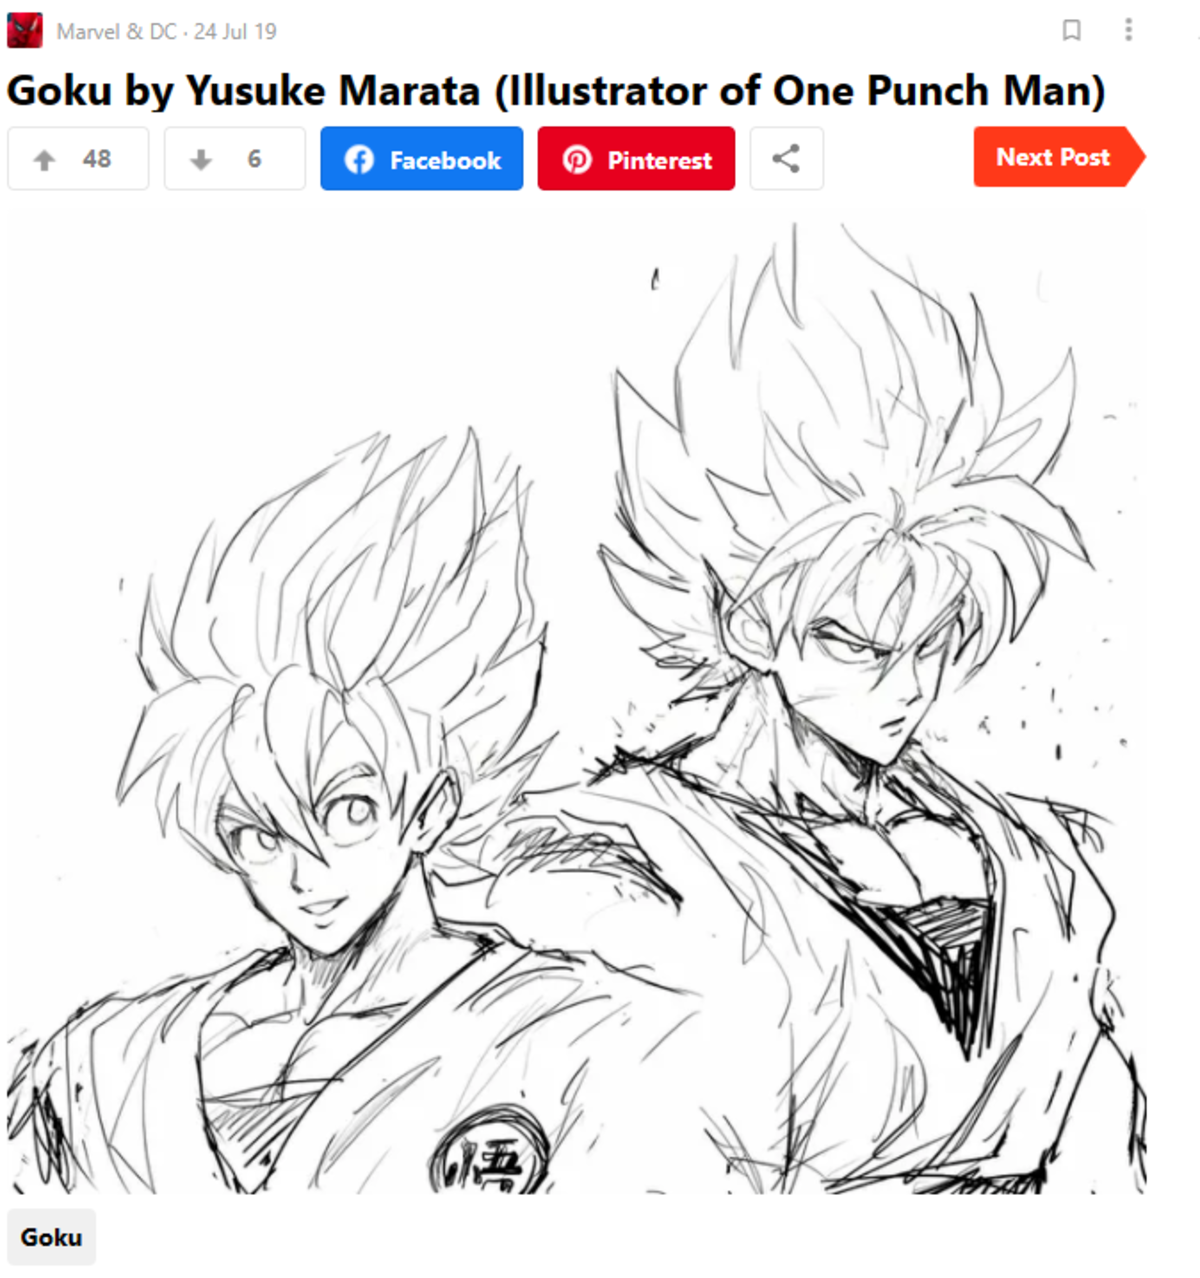 Goku-dragon-ball-ilustracion-one-punch-man-marata